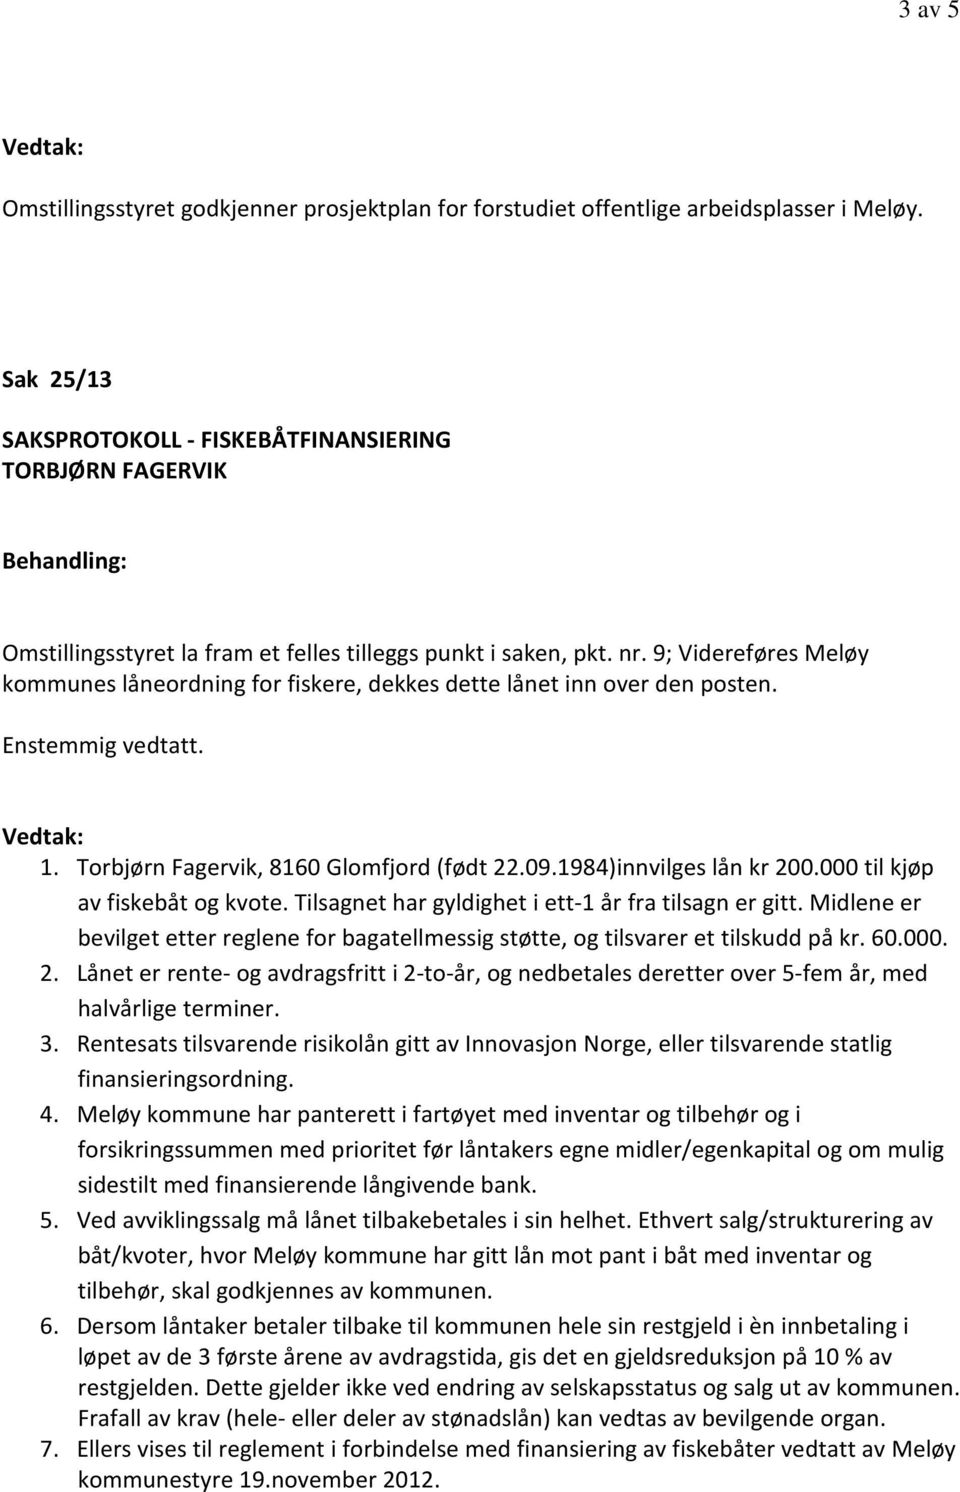 9; Videreføres Meløy kommunes låneordning for fiskere, dekkes dette lånet inn over den posten.. 1. Torbjørn Fagervik, 8160 Glomfjord (født 22.09.1984)innvilges lån kr 200.